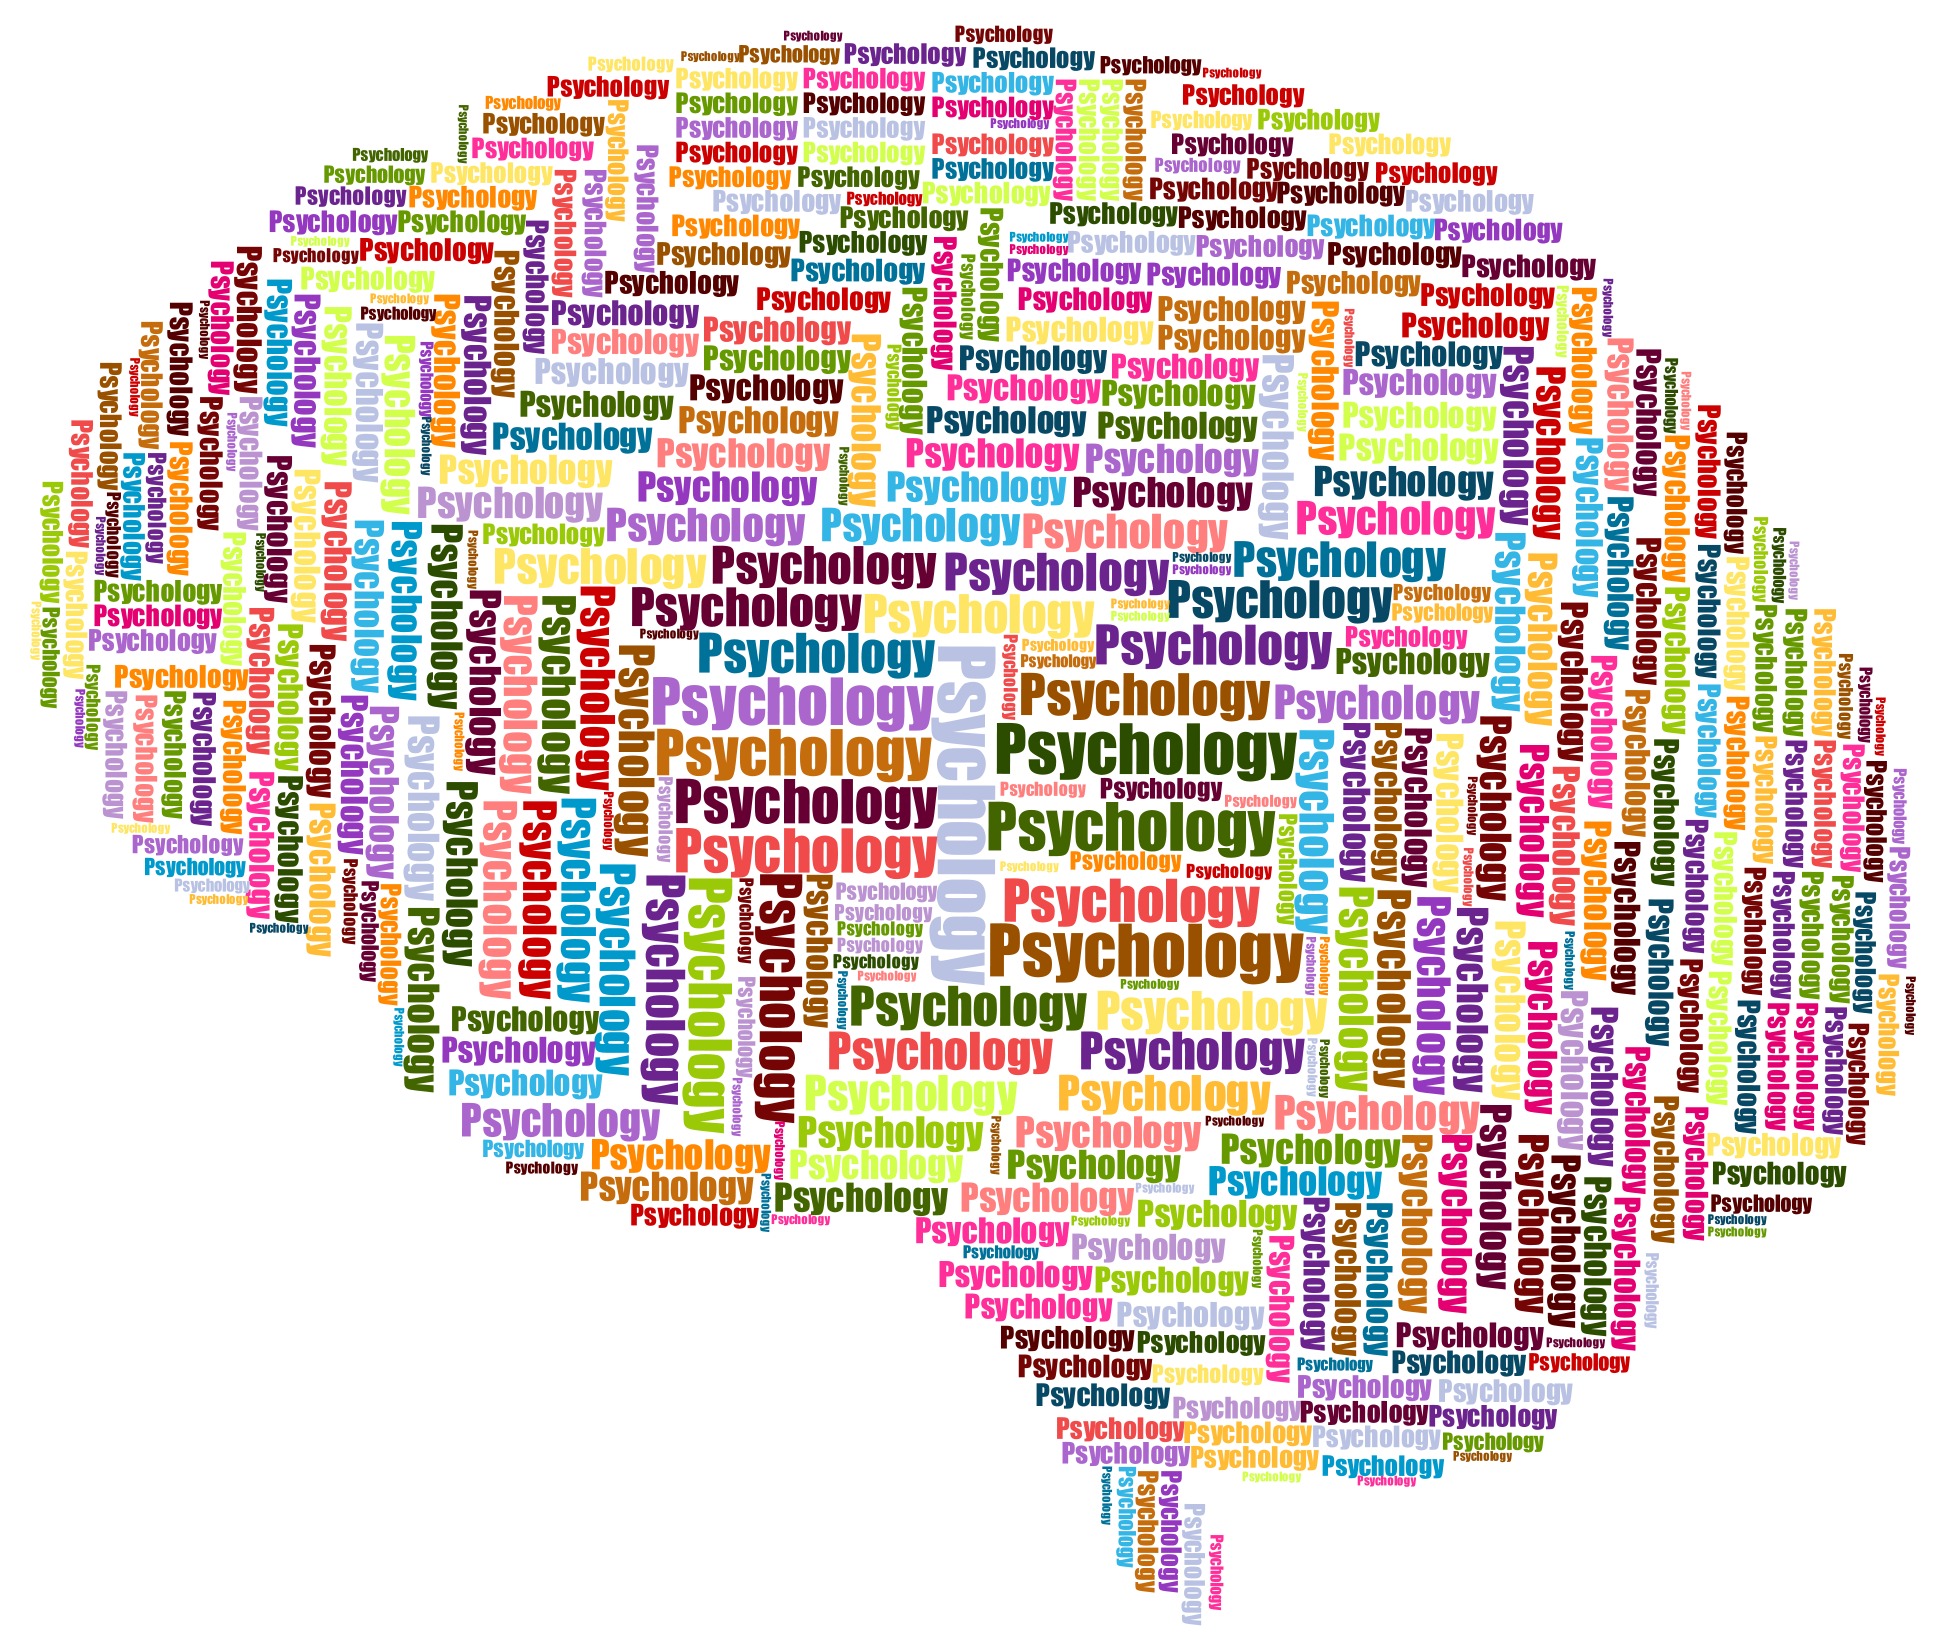 Brain mind psychology drawing free image download